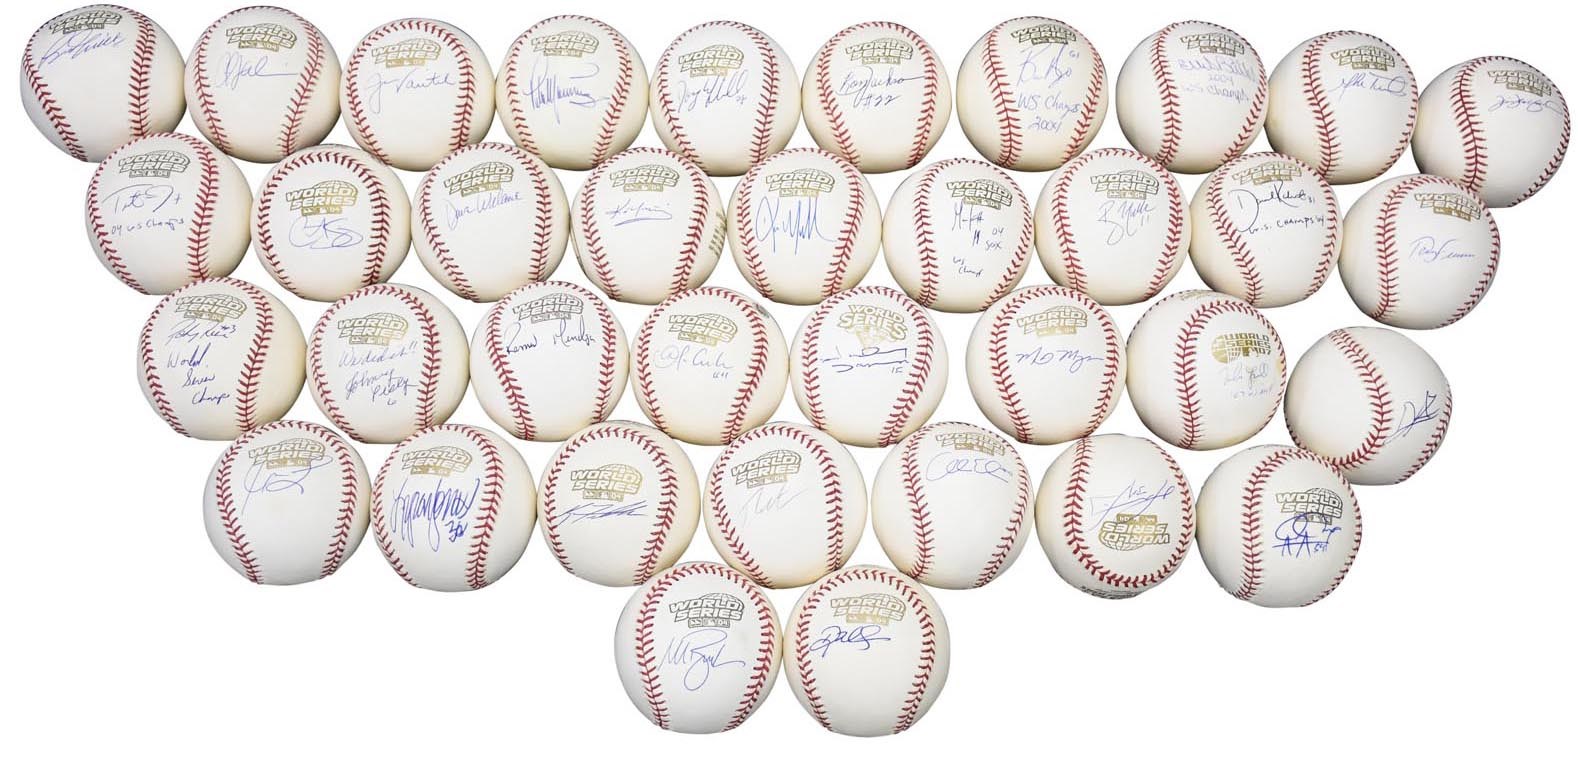 - 2004 World Champion Boston Red Sox Single-Signed Baseball Complete Team Set (36)